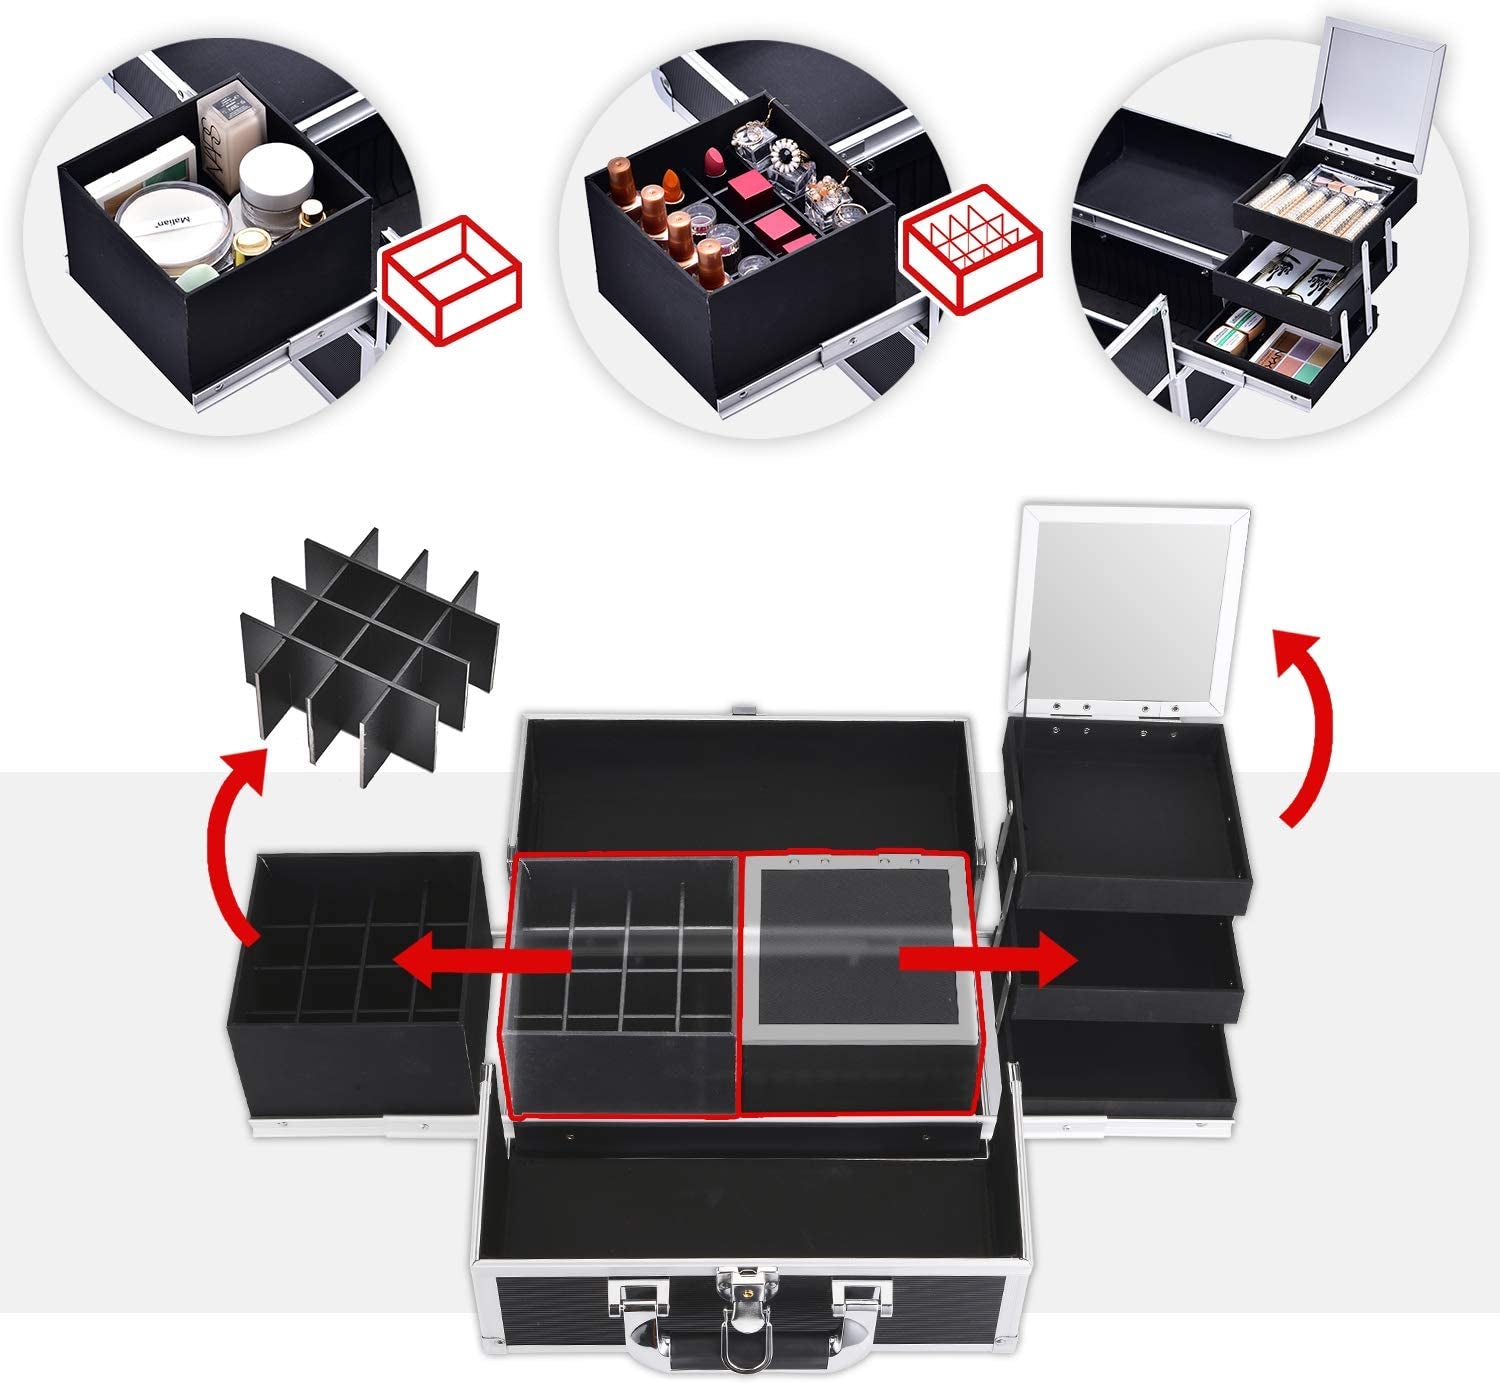 Joligrace Makeup Train Case Organizer Box Professional Multi-Purpose Cosmetic Storage with Sliding Trays, Polish Slots & Mirror, Portable Lockable with Keys, Large Black